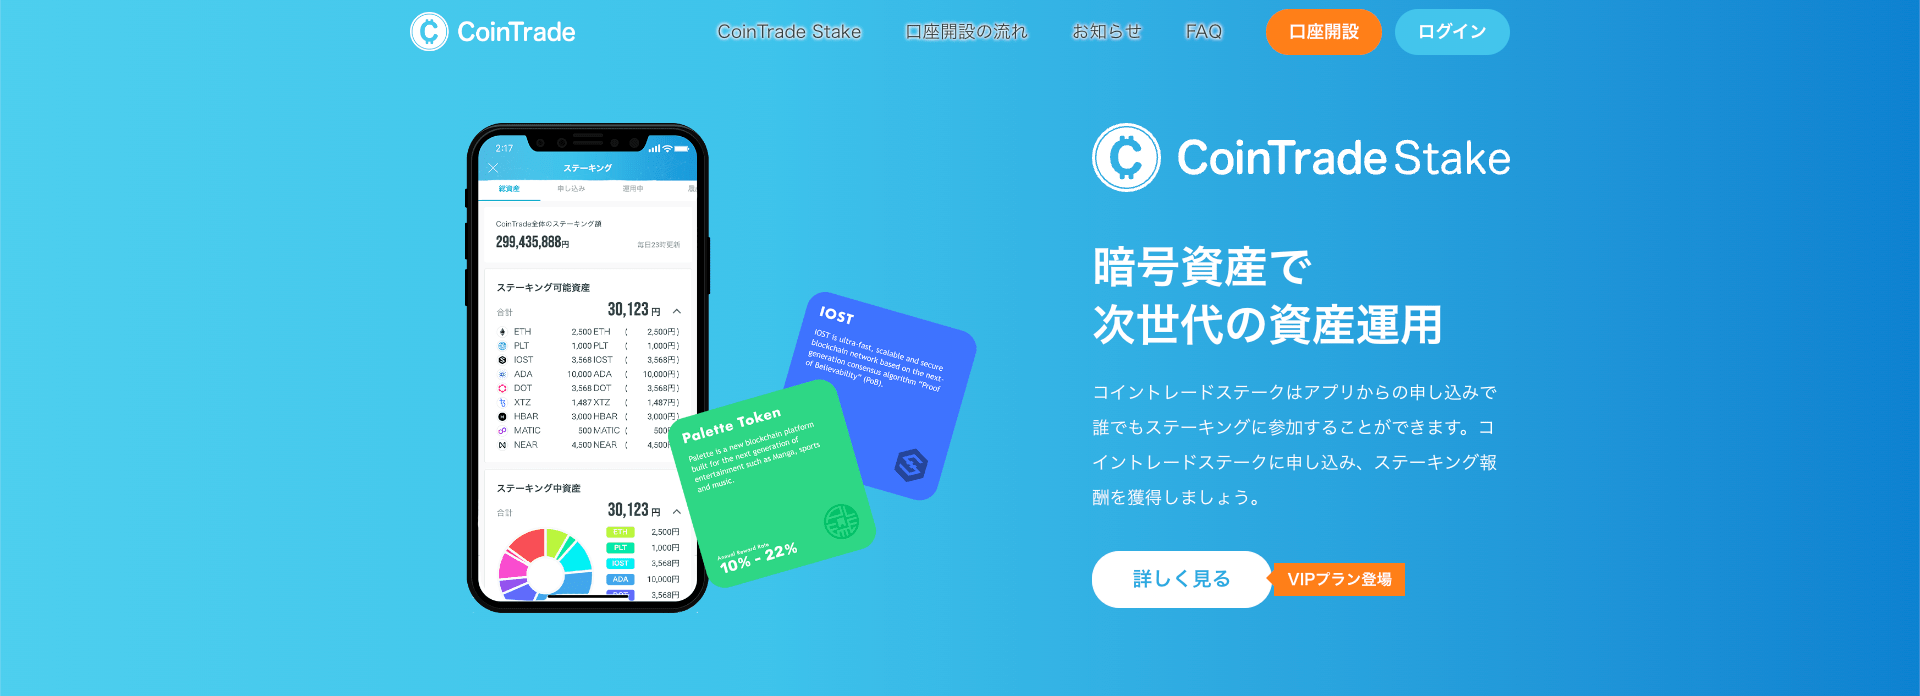 CoinTrade 公式サイト